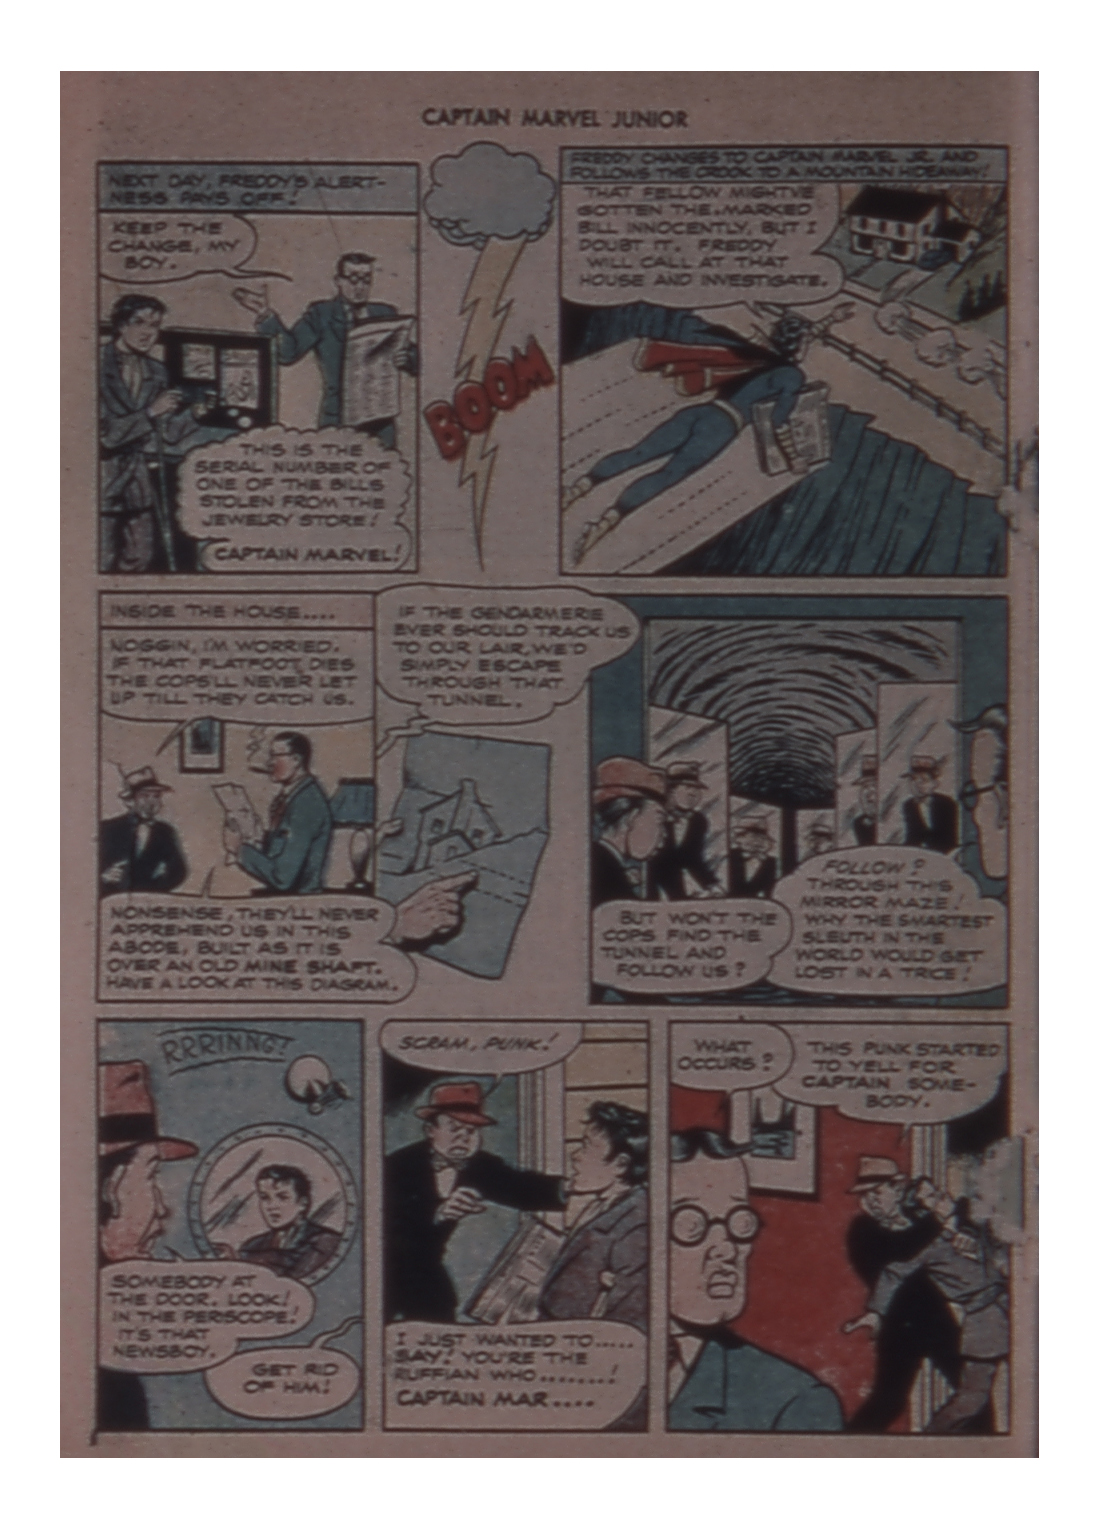 Read online Captain Marvel, Jr. comic -  Issue #58 - 30